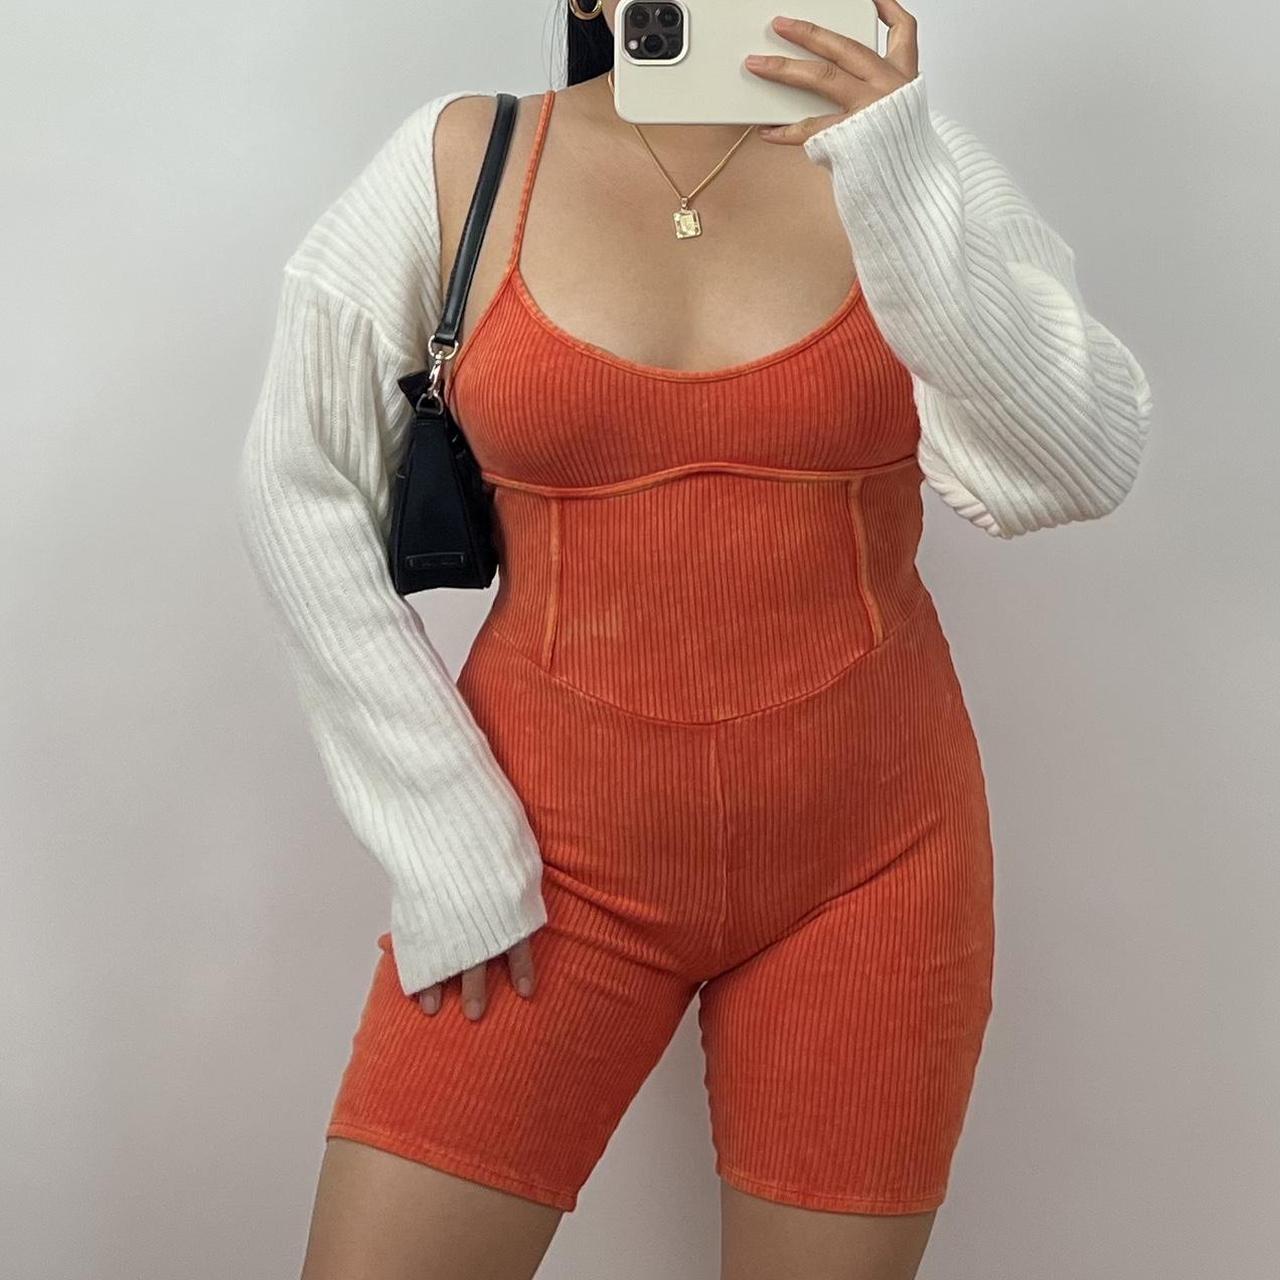 Rib orange bodysuit/unitard🍊 The absolute cutest. - Depop